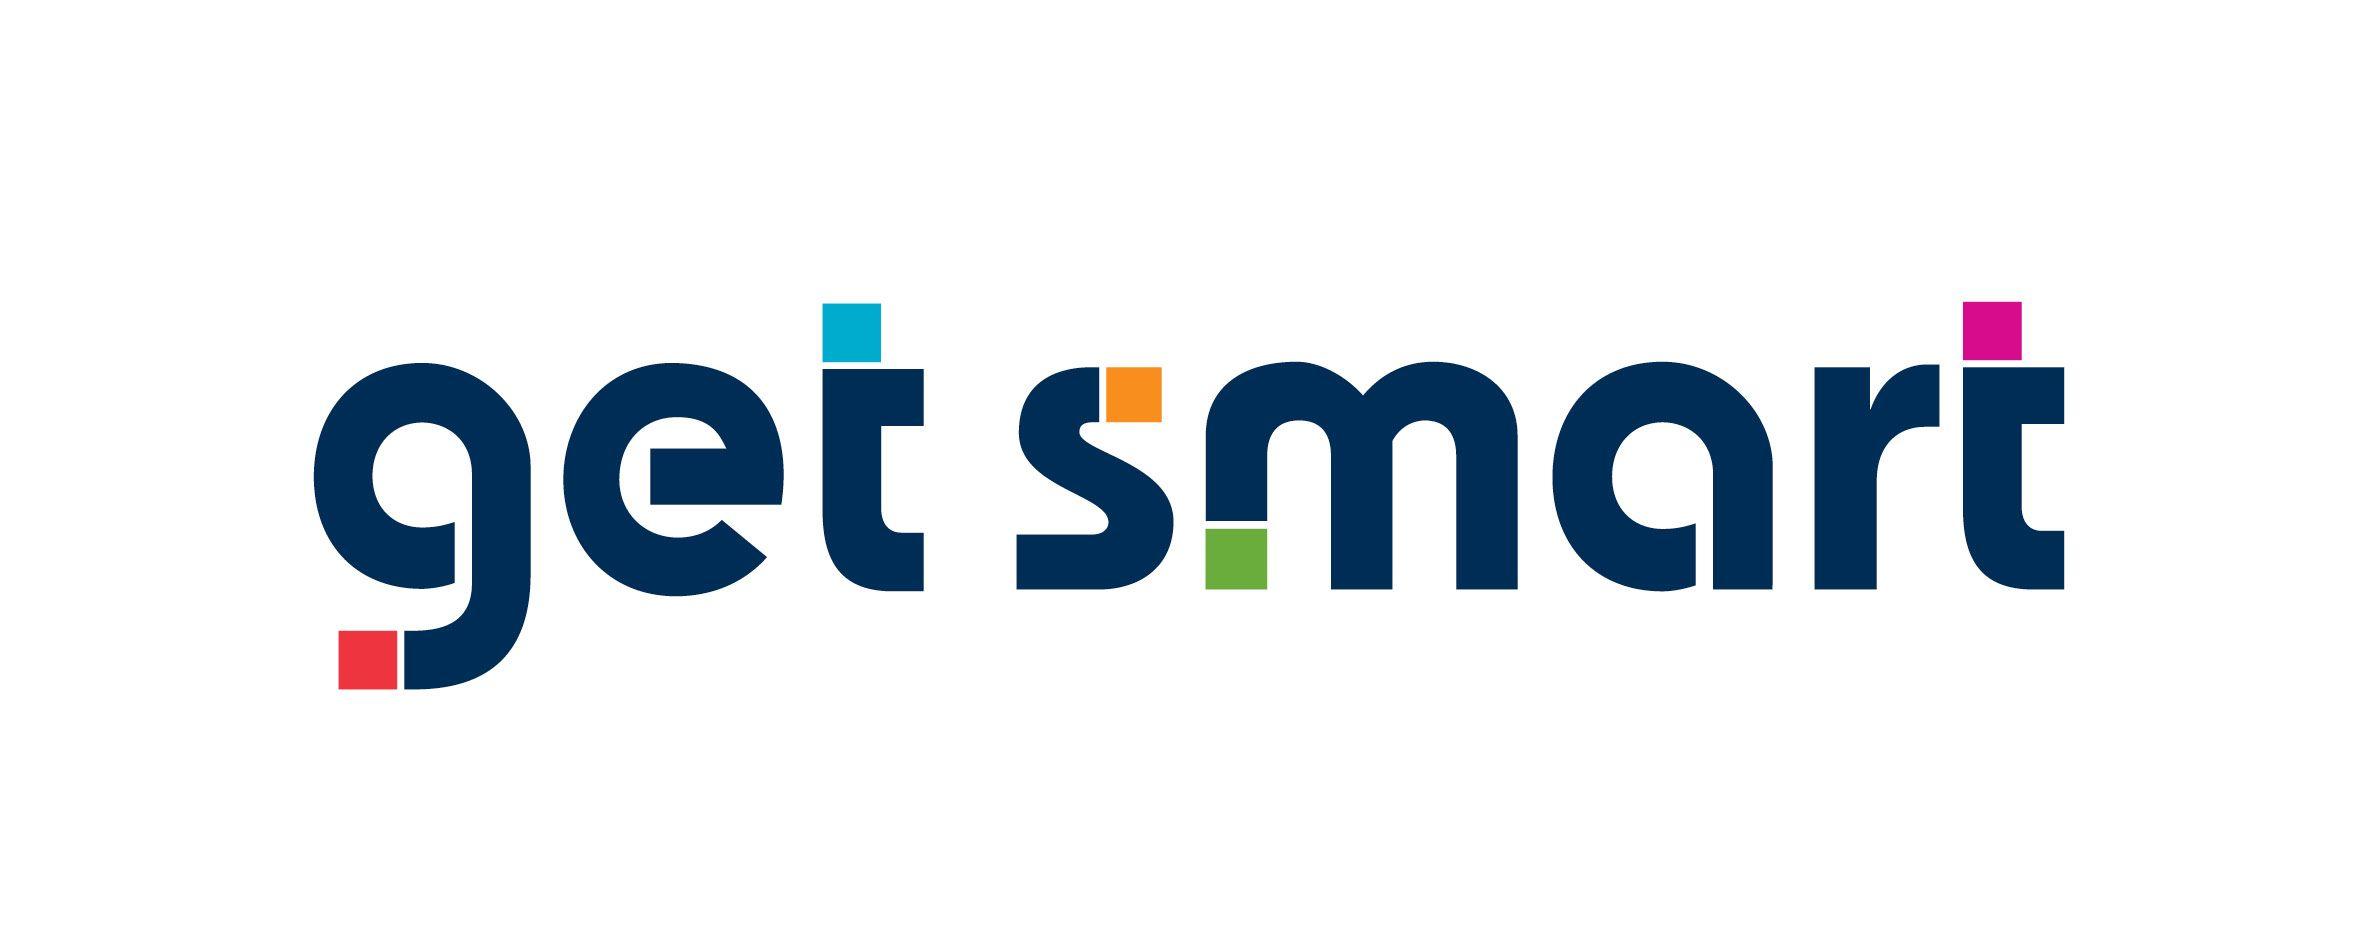 Get Smart Logo - Get smart Logos